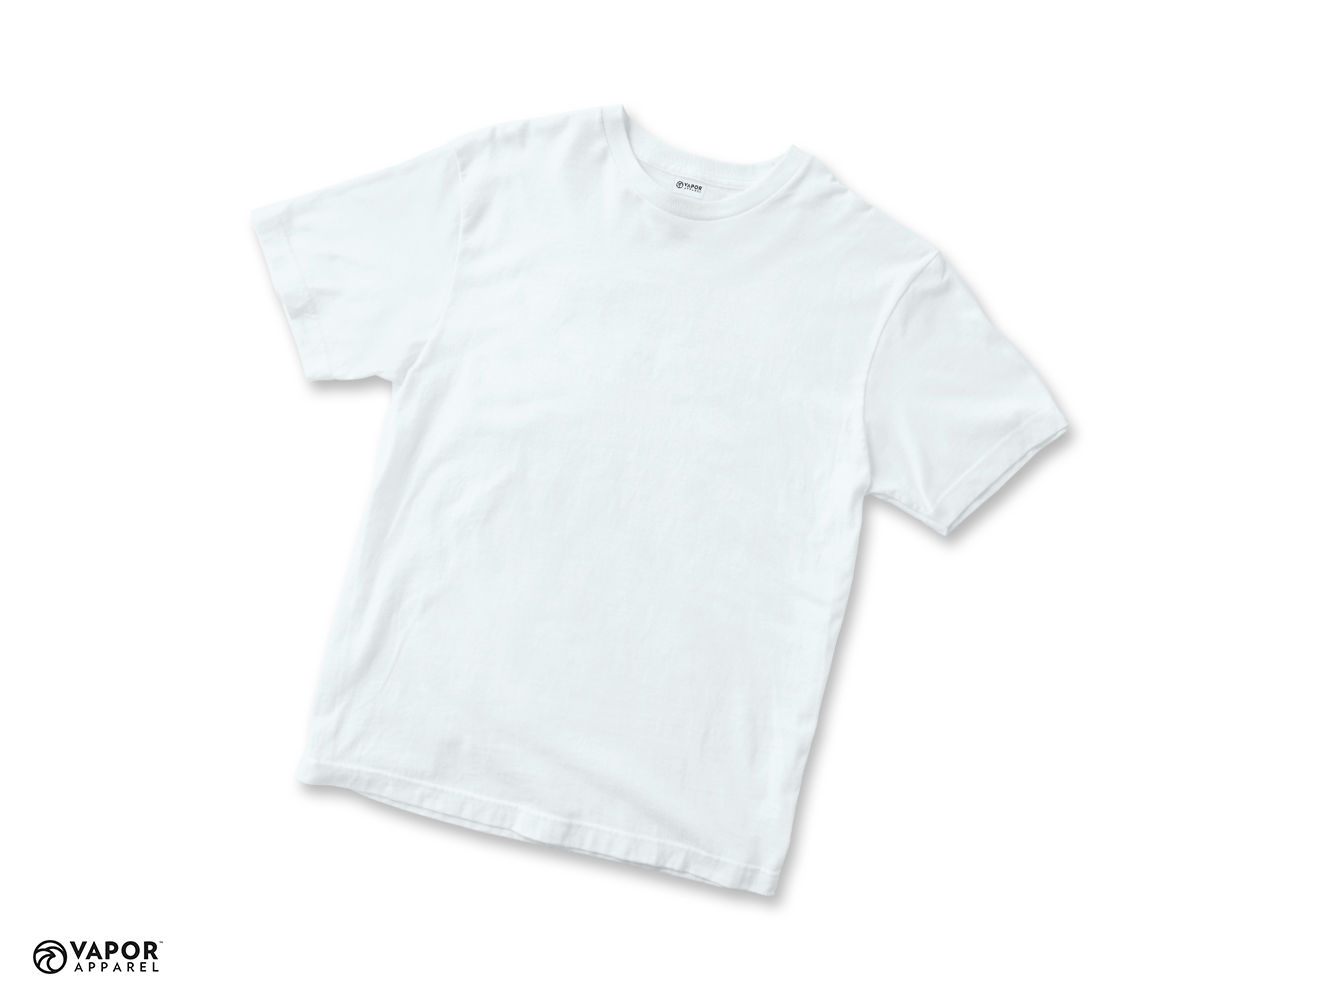 Vapor Sublimation T-Shirt for Adults size XS - White